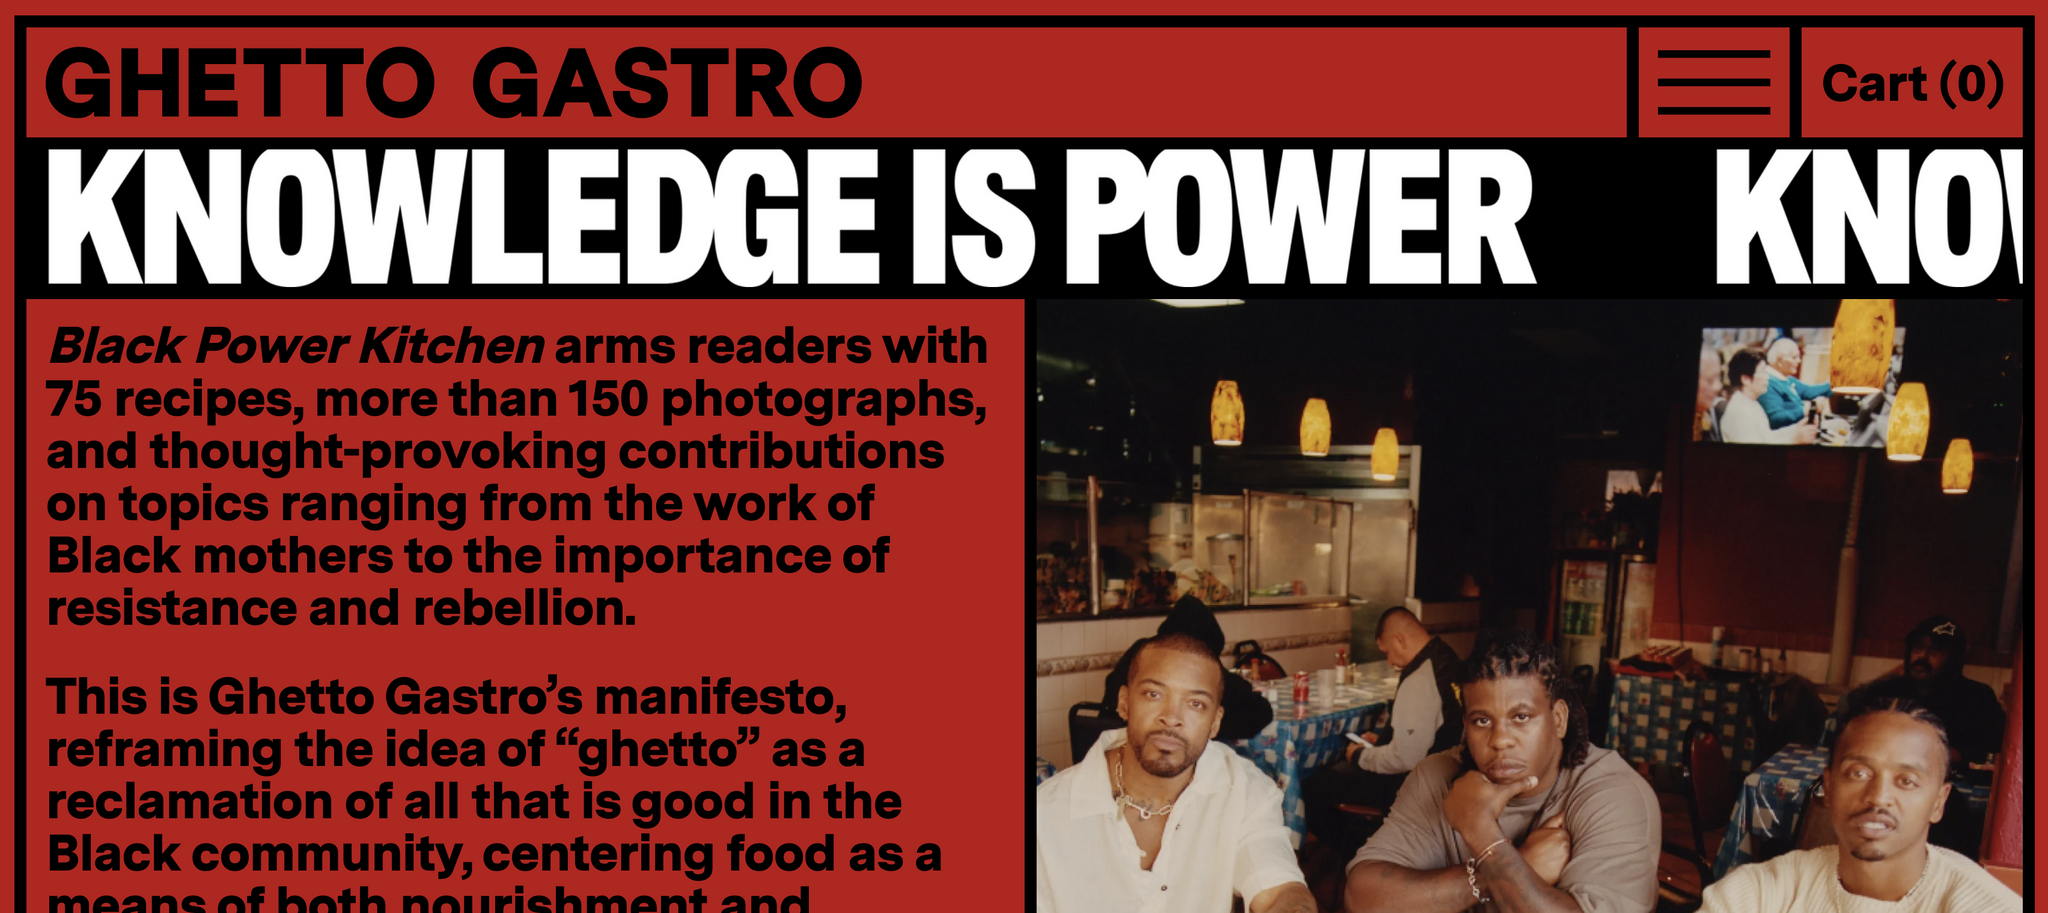 ‘Black Power Kitchen’: cooking up community activism